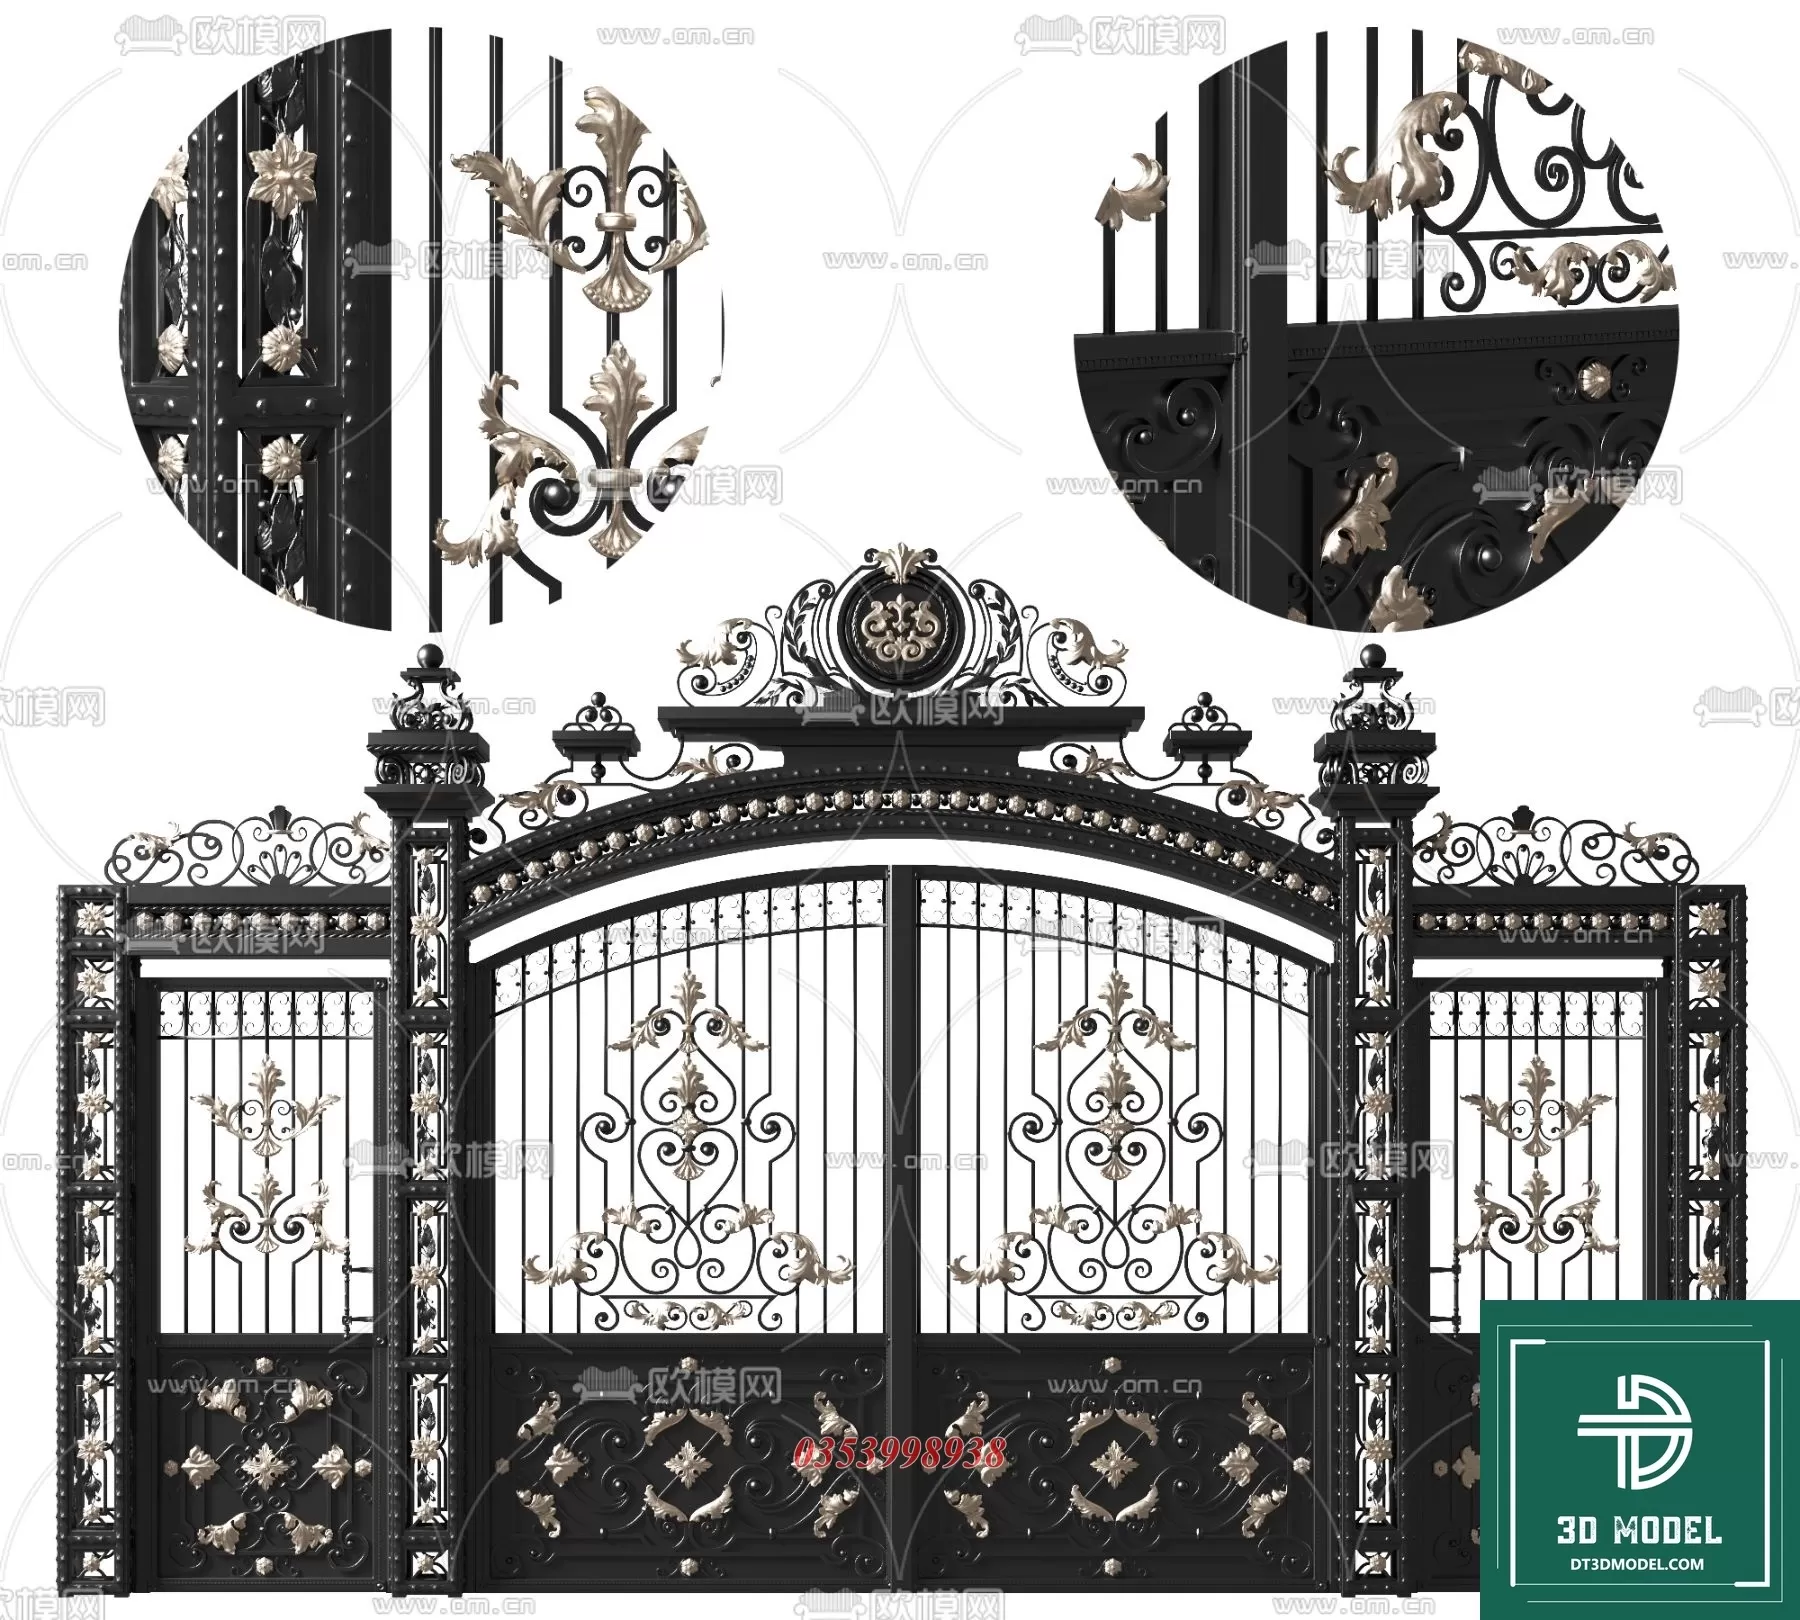 CLASSIC GATE – 3D MODELS – 076